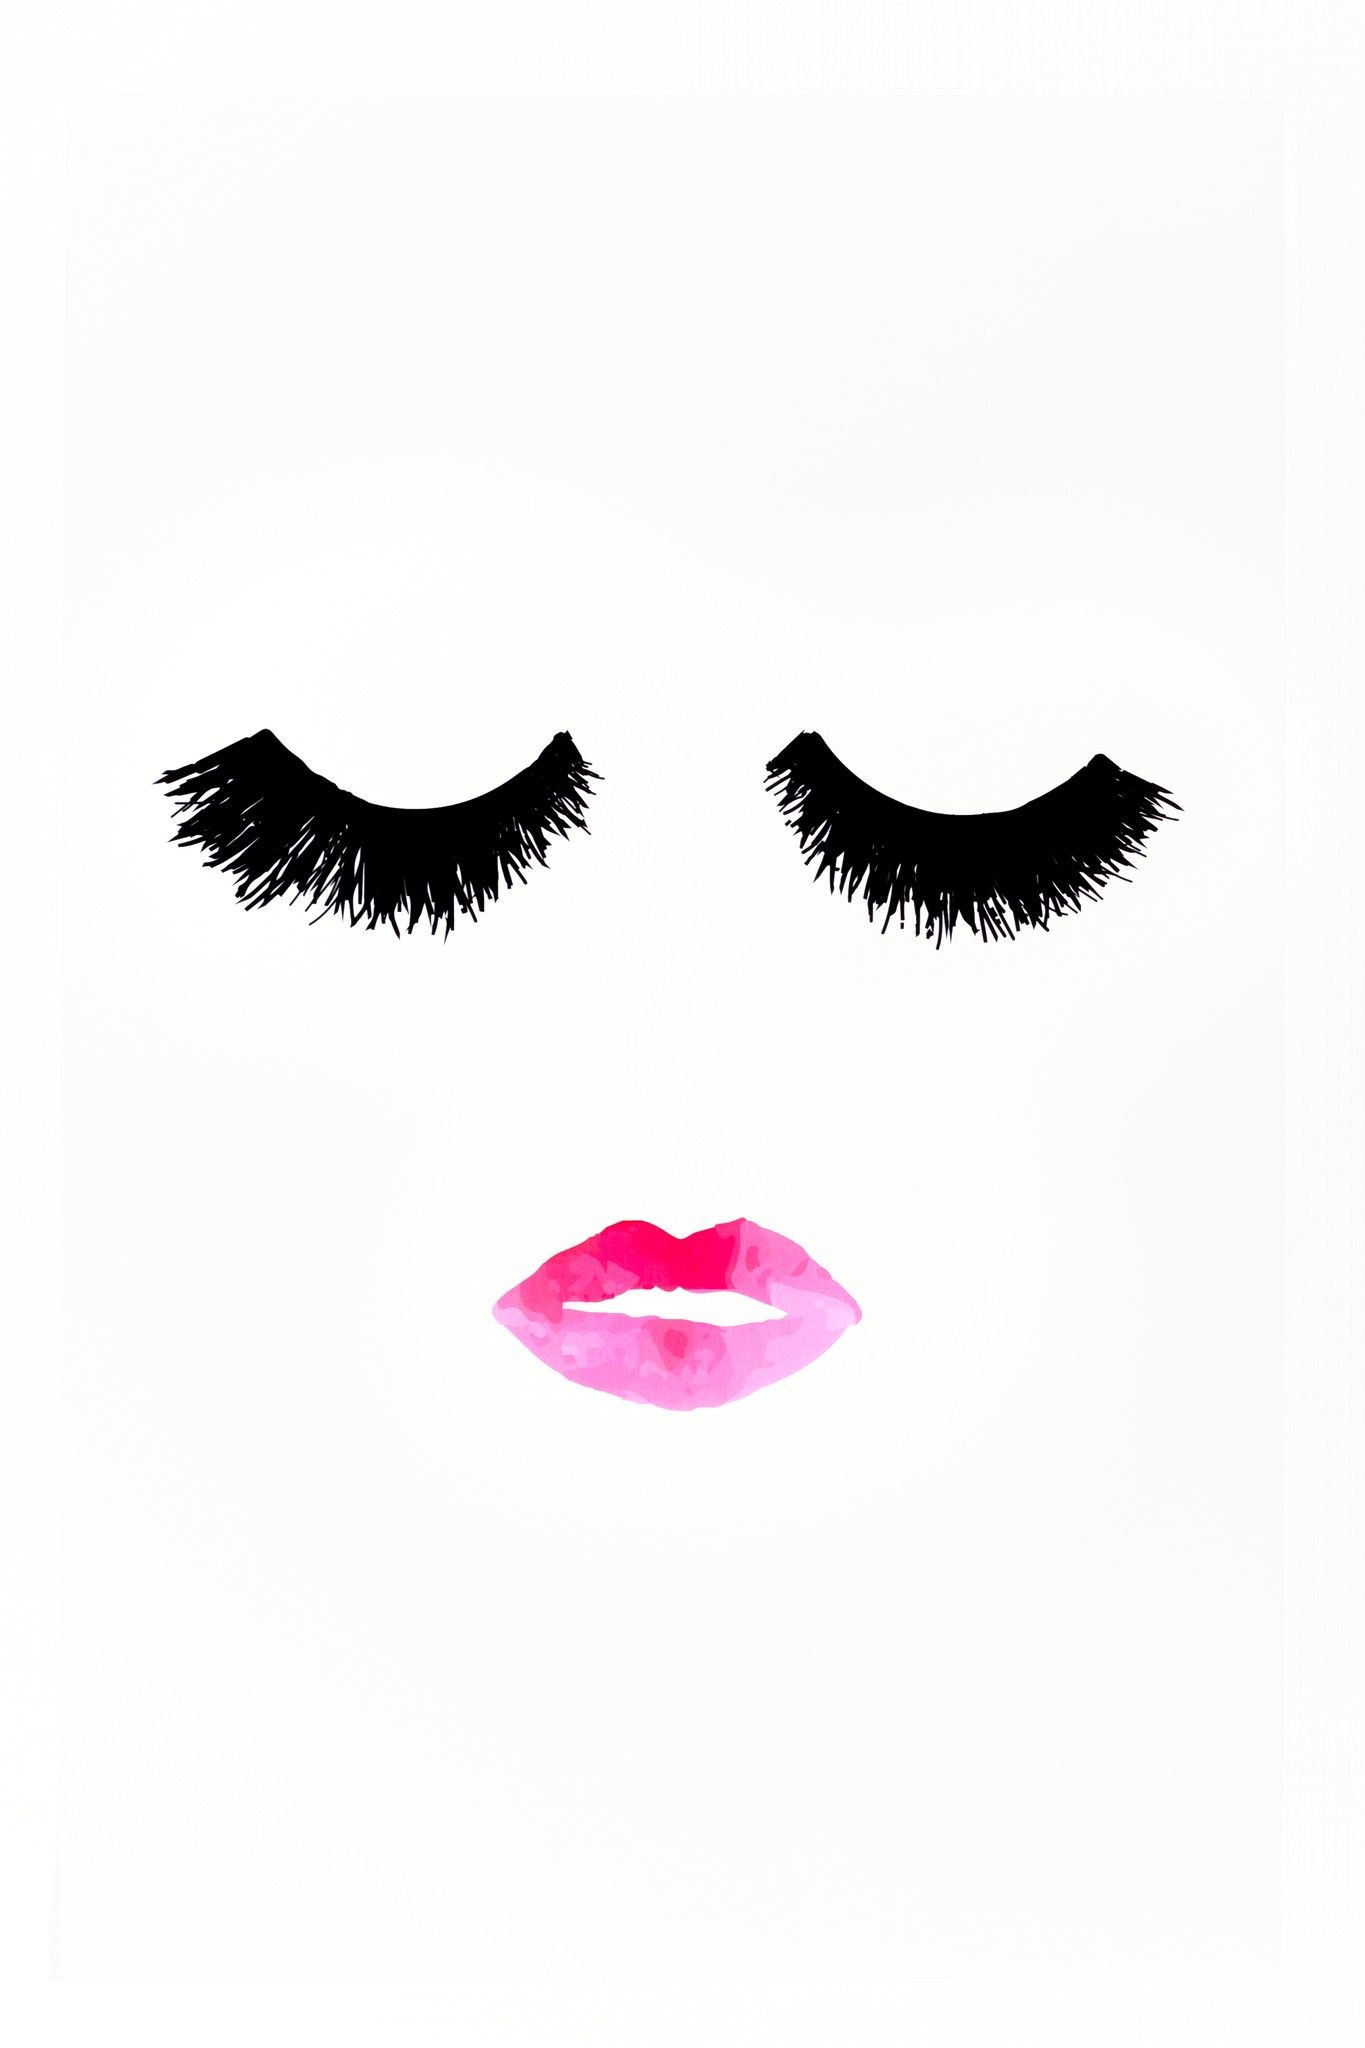 maquillaje fondos de pantalla tumblr,pestaña,productos cosméticos,ceja,ojo,labio